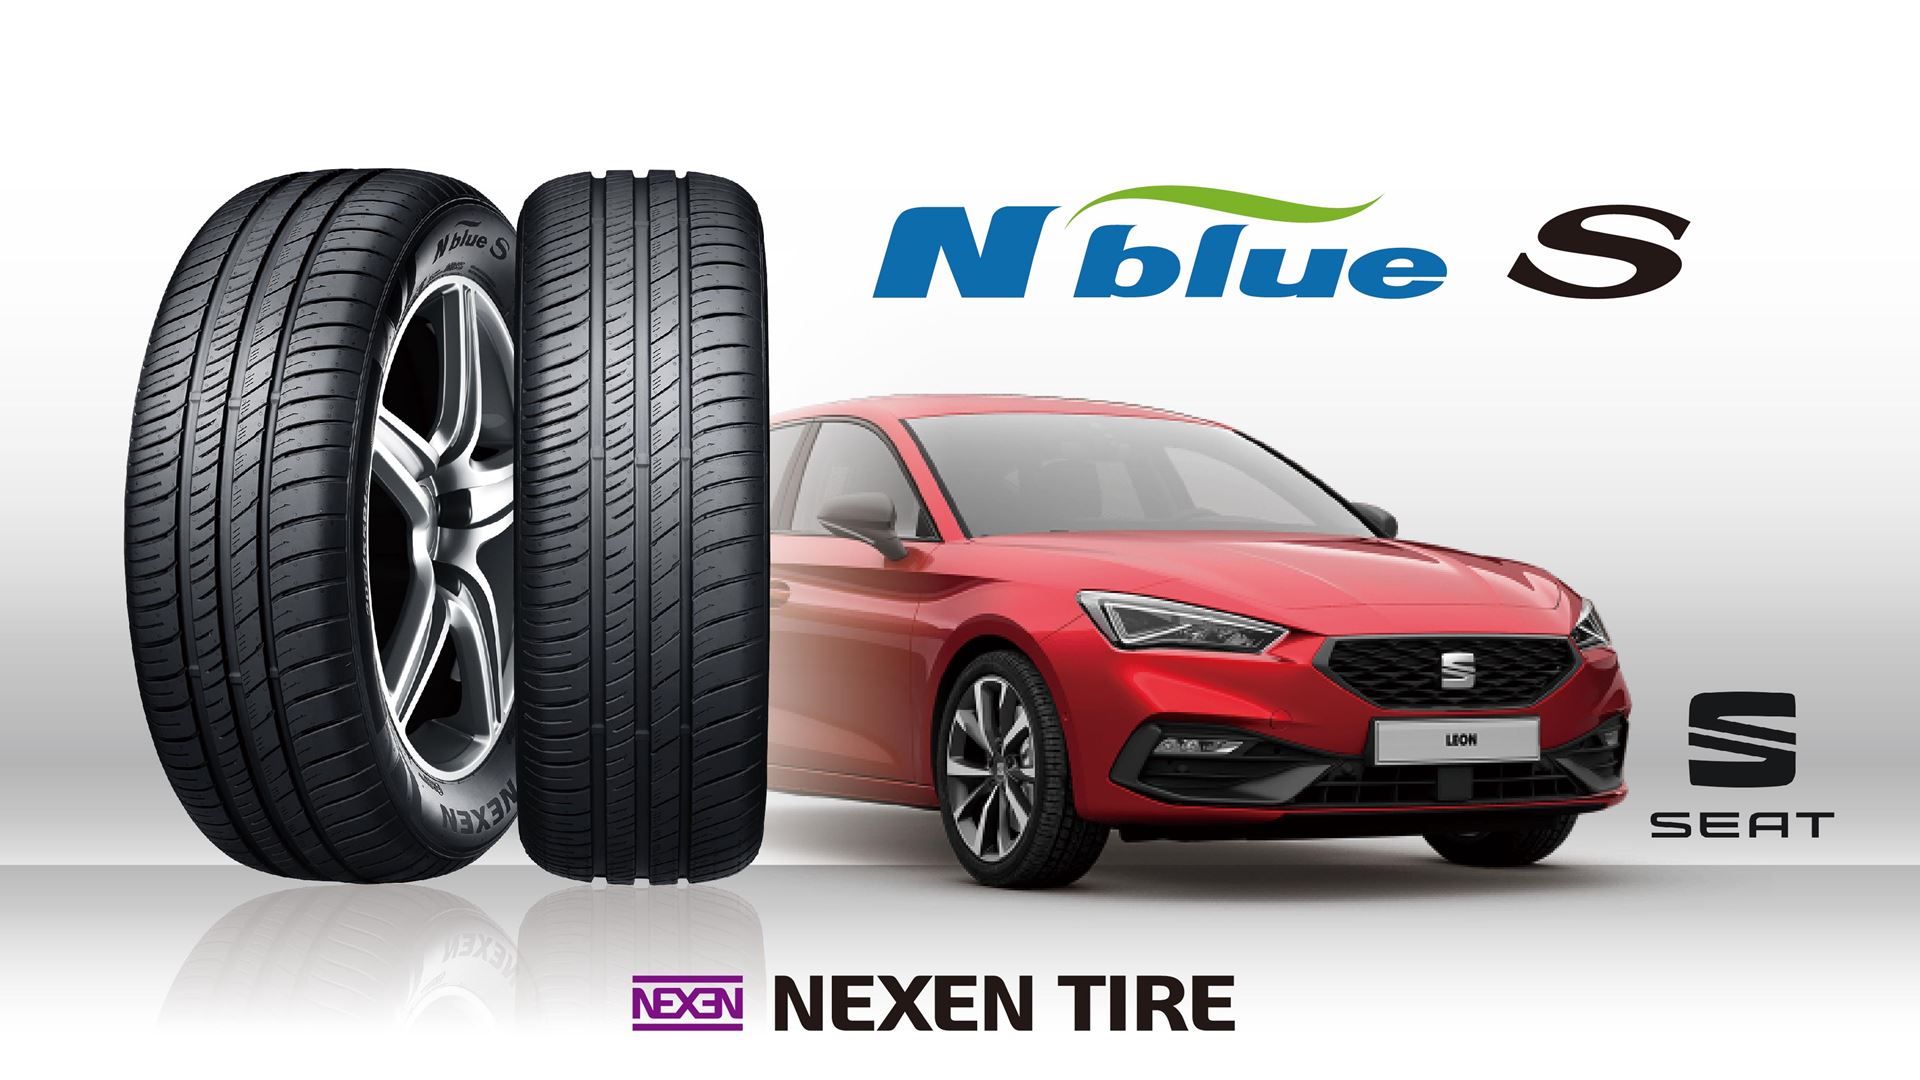 NEXEN TIRE Supplies Original Equipment Tires for SEAT Leon